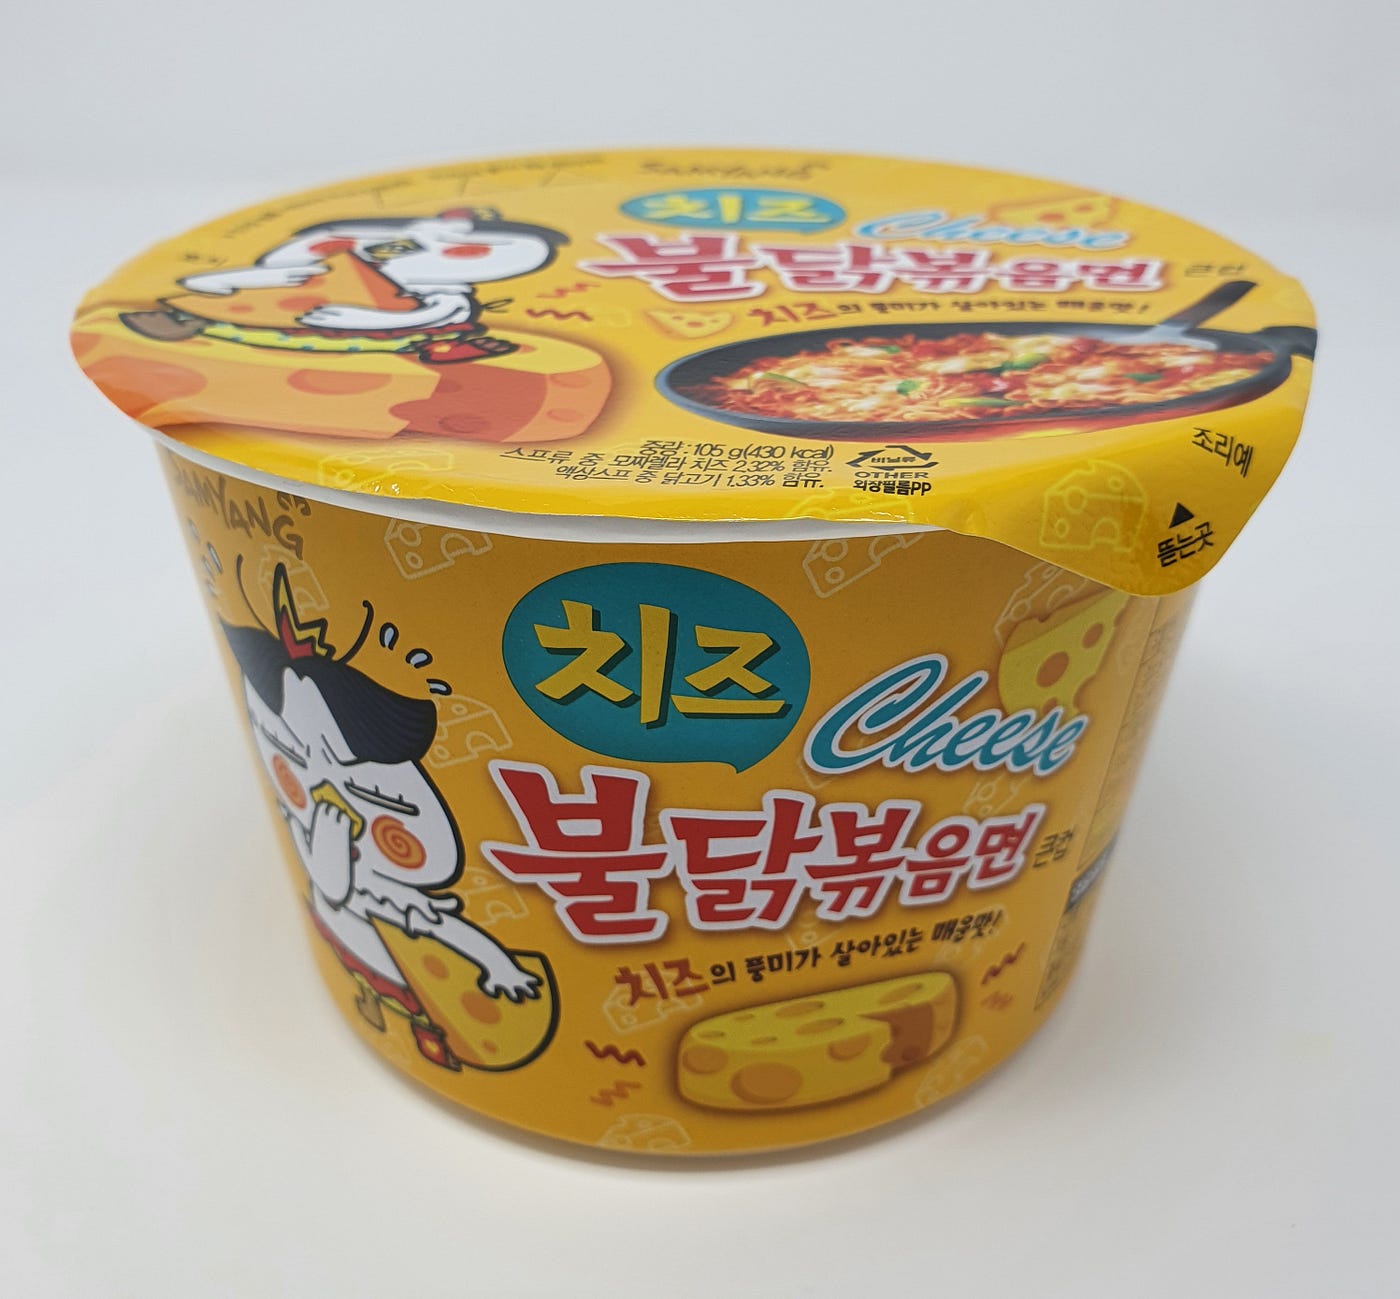 How to Prepare Samyang Buldalk Bokkeum Myeon Cheese (Cup Version), by  Burger